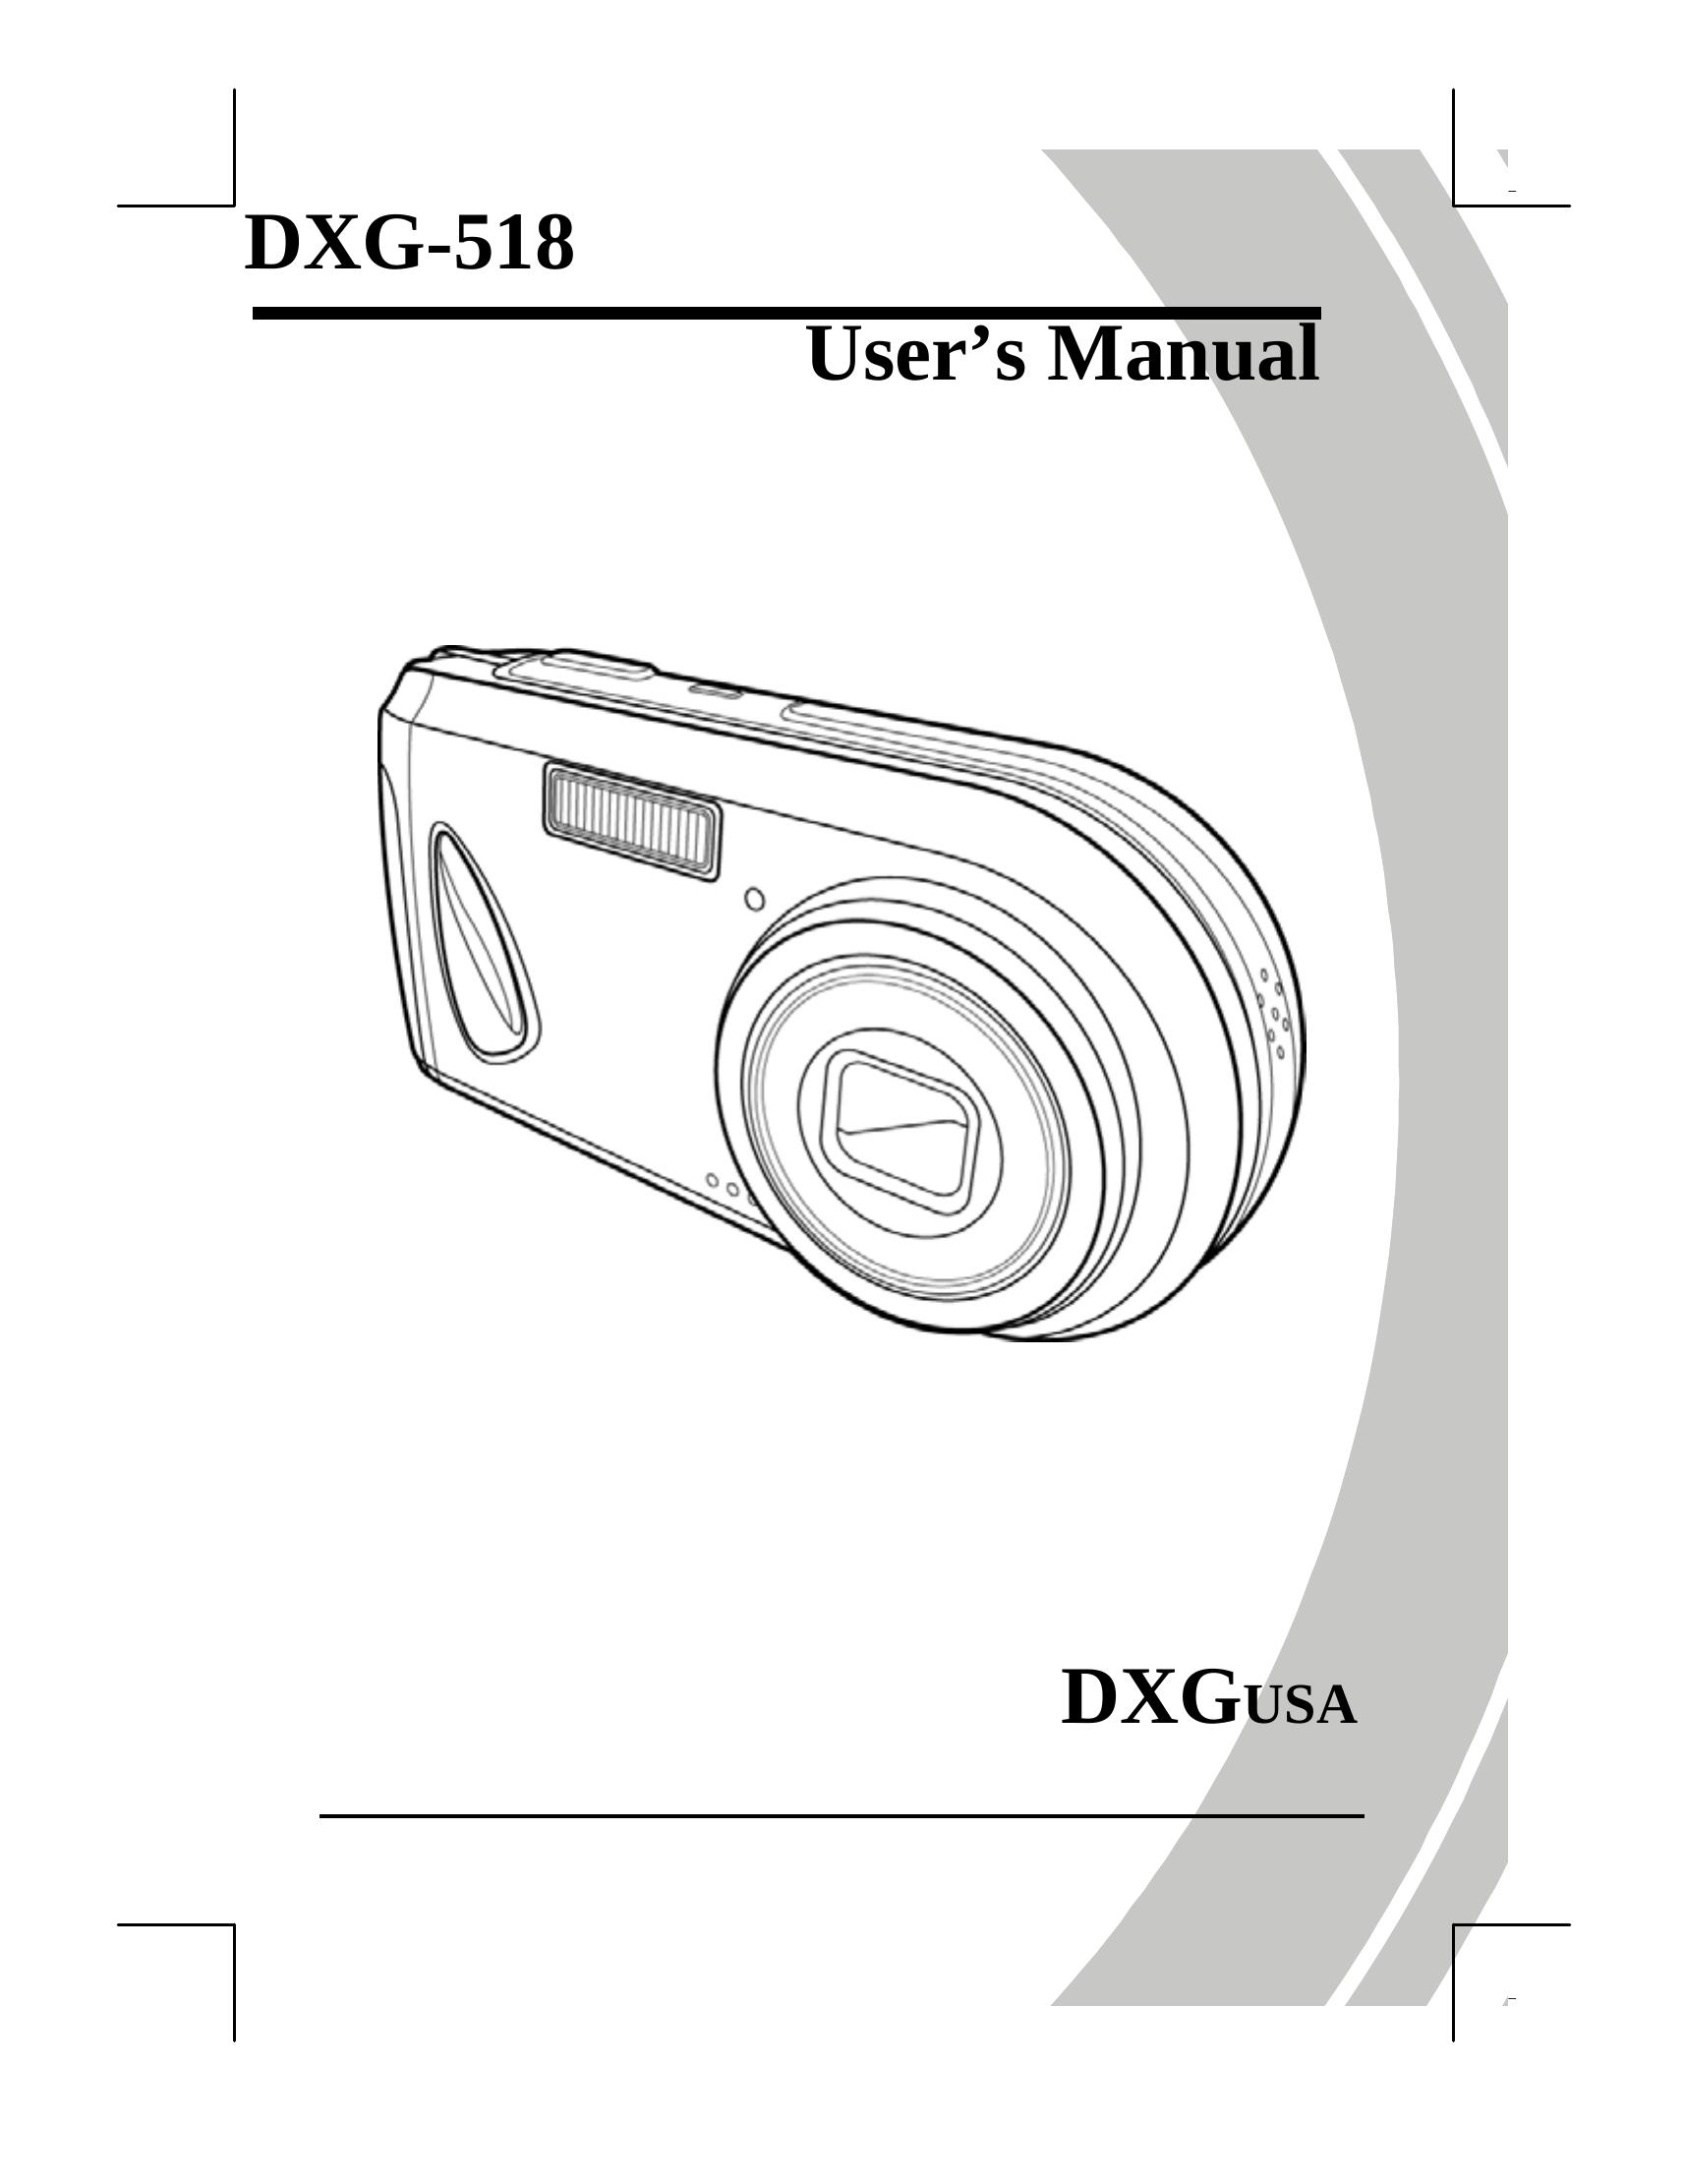 DXG Technology DXG-518 Digital Camera User Manual